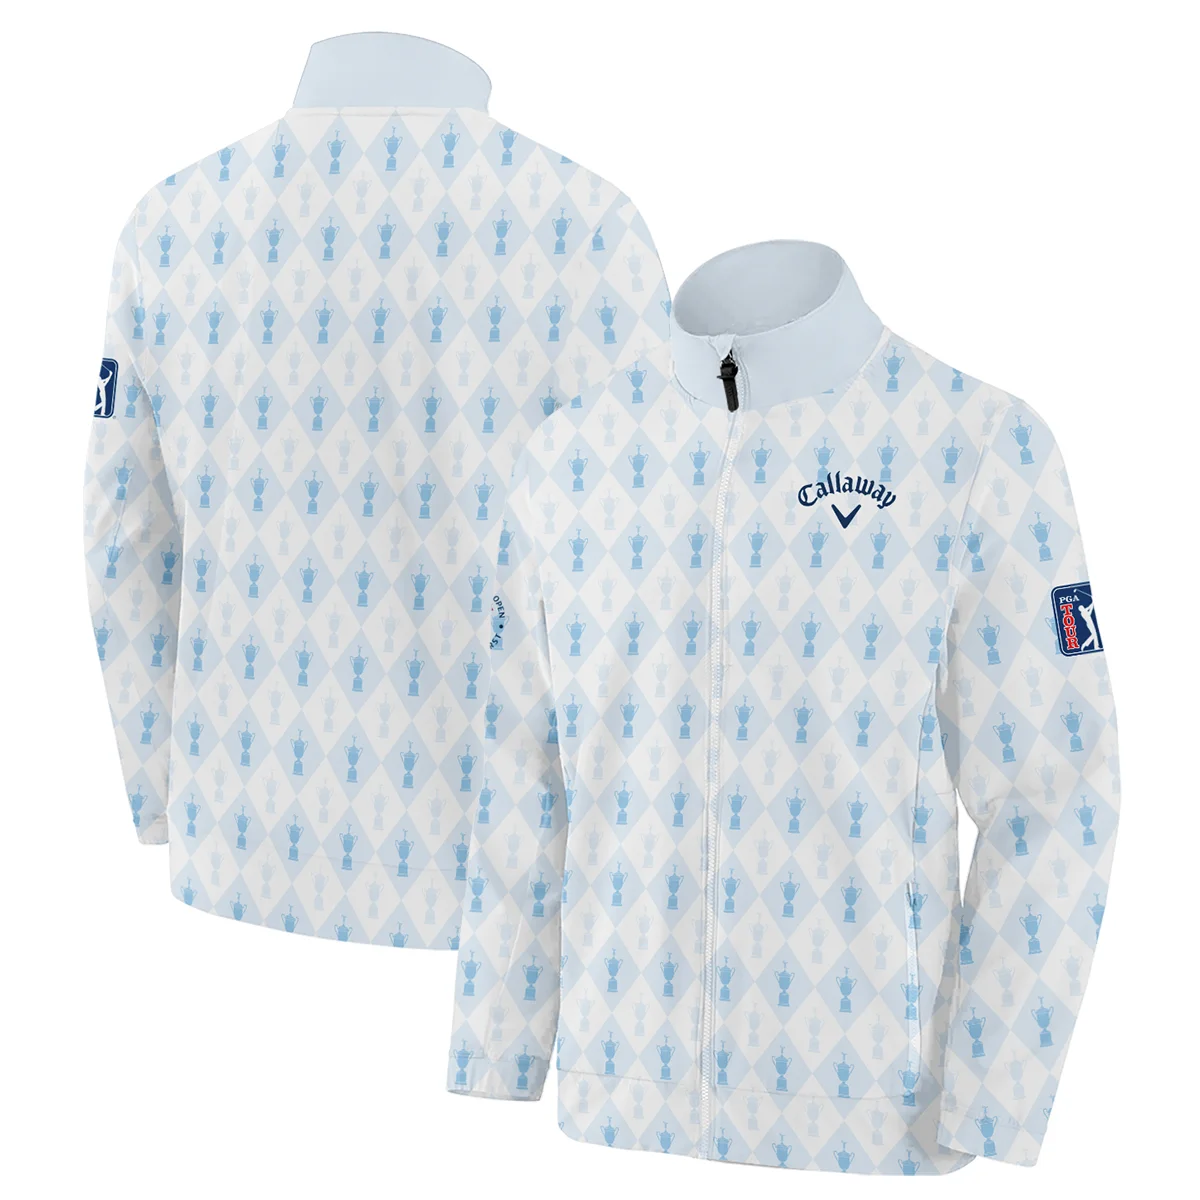 PGA Tour 124th U.S. Open Pinehurst Callaway Sleeveless Jacket Sports Pattern Cup Color Light Blue Sleeveless Jacket